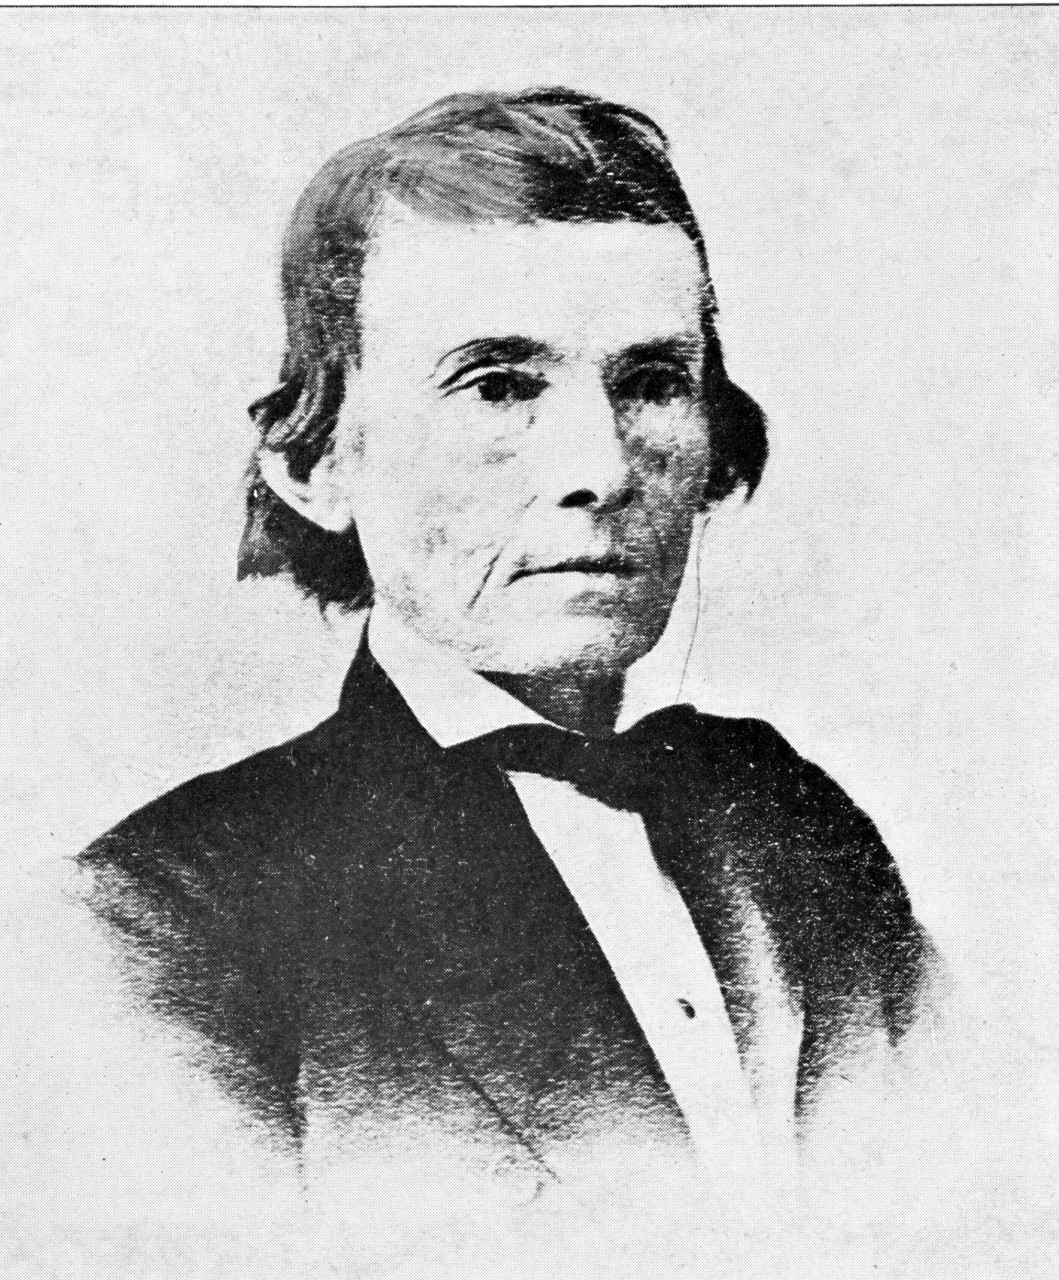 Confederate States Vice President Alexander Hamilton Stephens